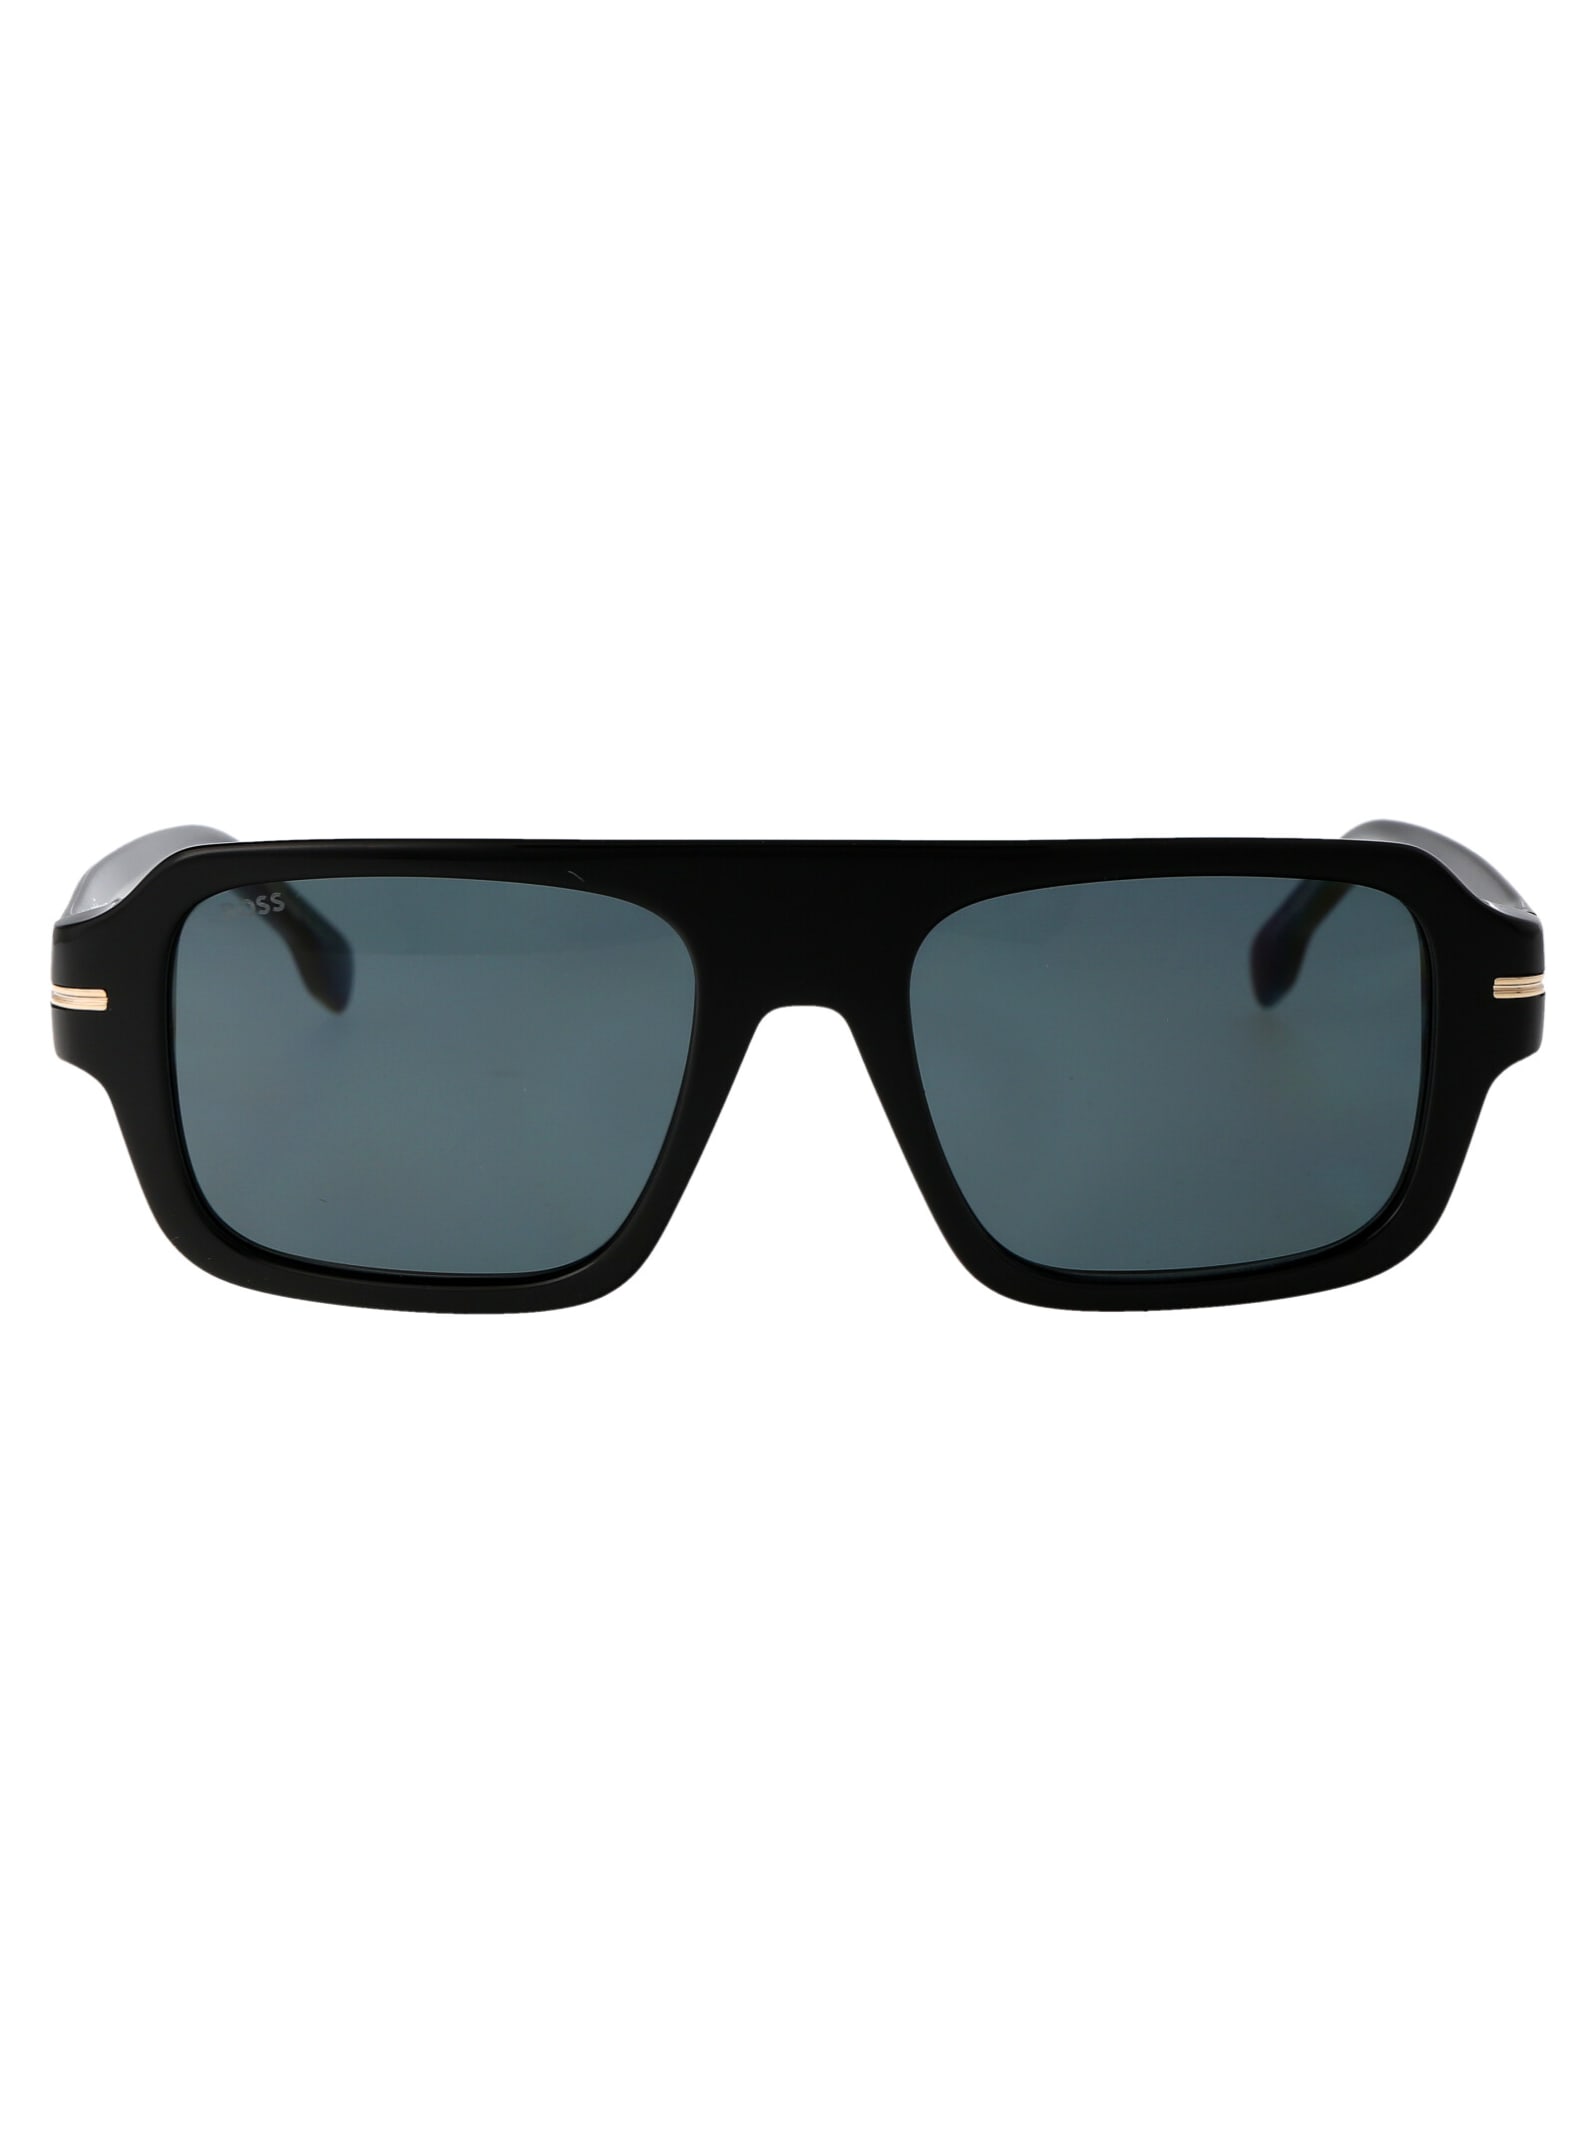 Boss 1595/s Sunglasses